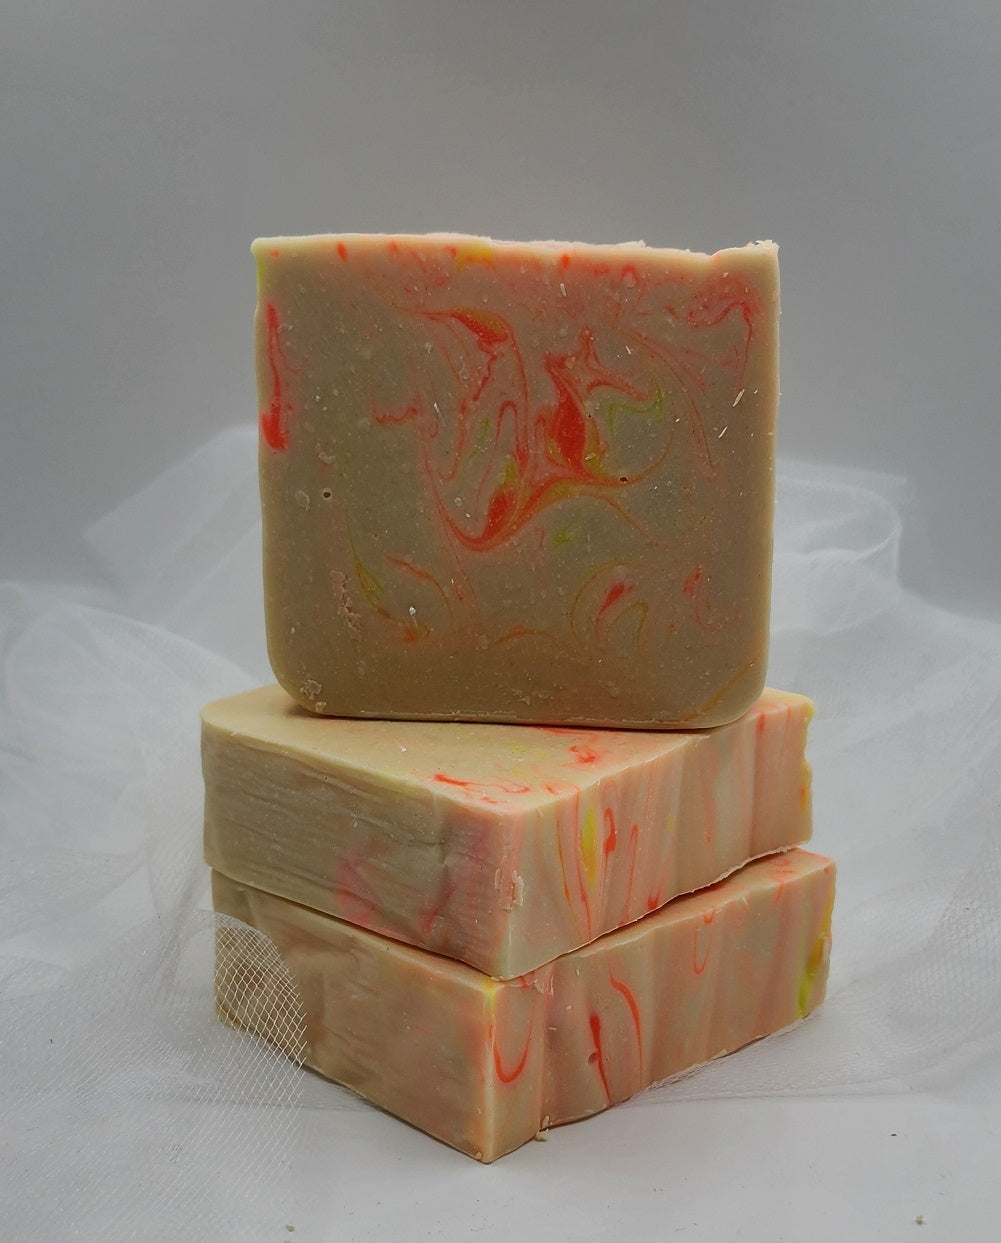 ENERGY ARTISAN Soap / Bar Soap /  Goat's Milk Soap / Honey / Yogurt / Colloidal Oatmeal, Gift Soap / Gift Idea / Handmade Soap / Cold Process Soap